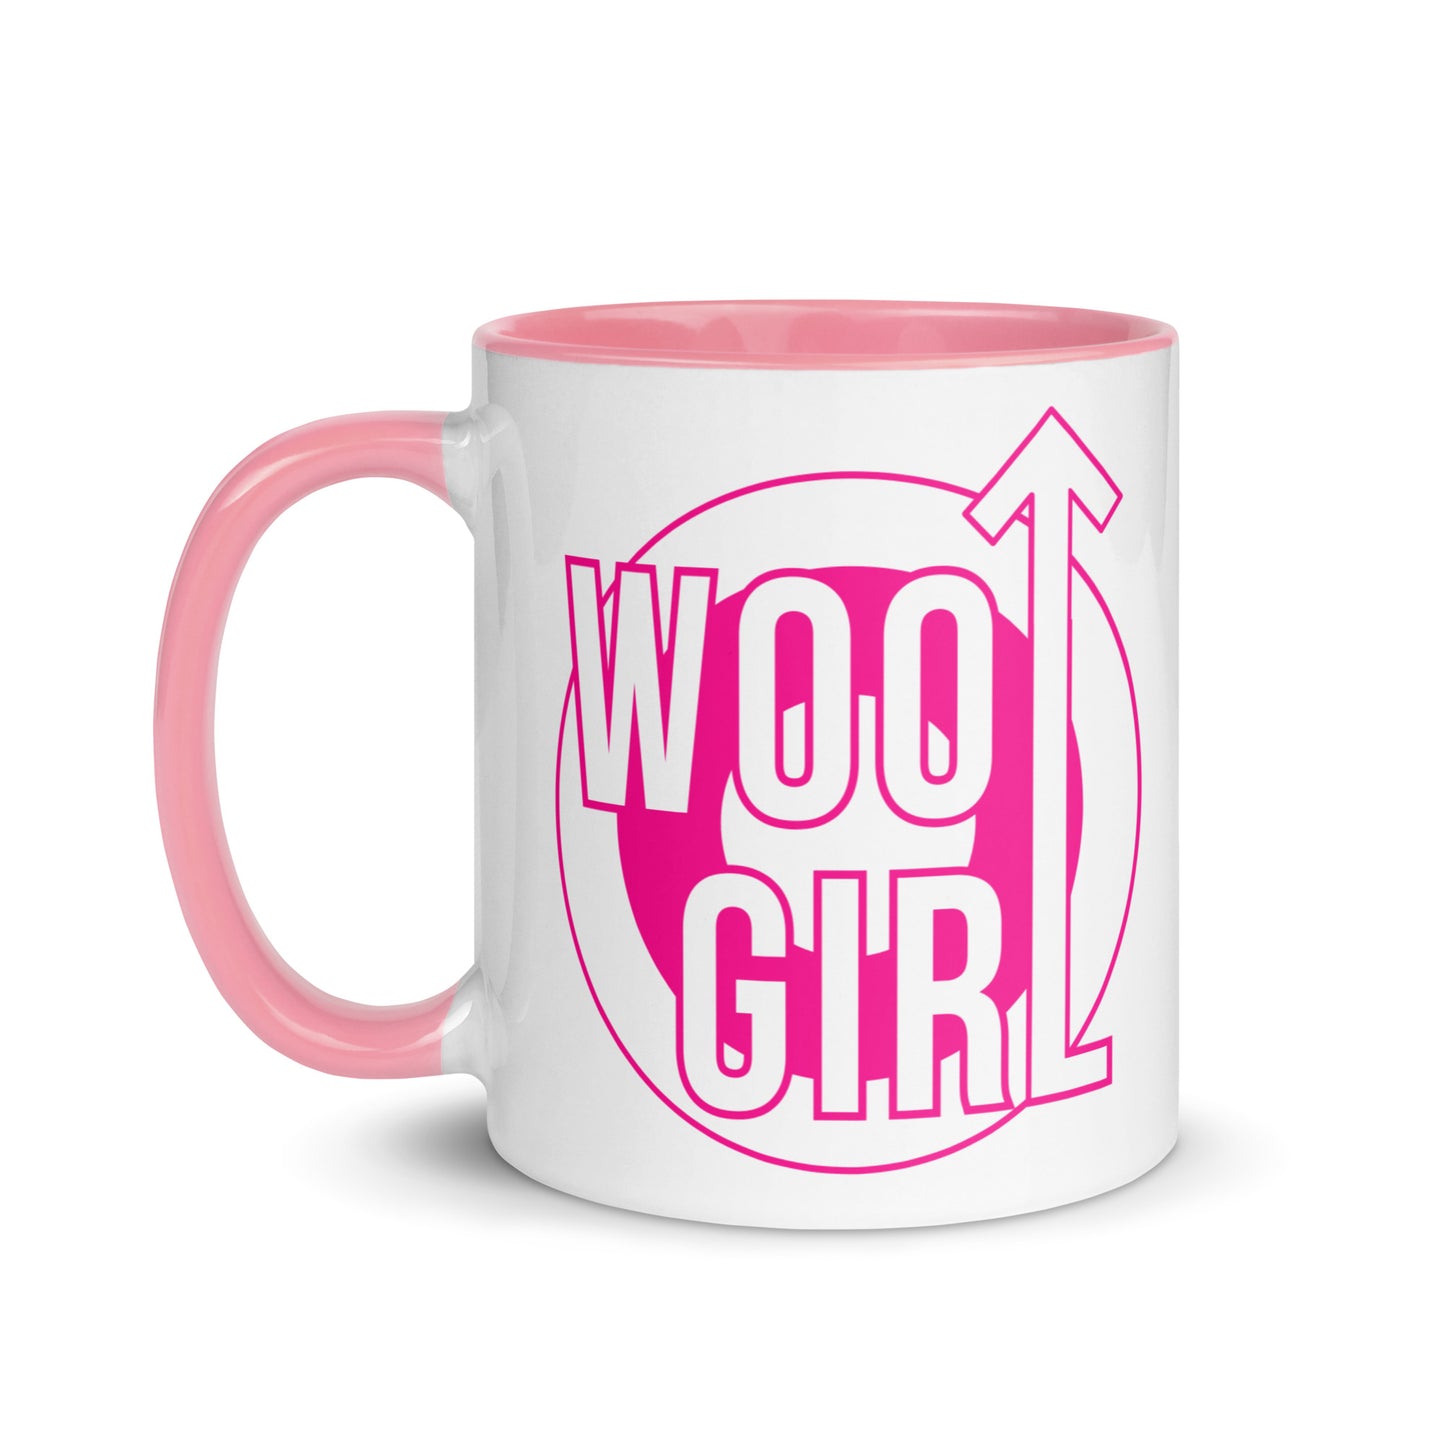 Woo Girl "The Woo" Mug with Color Inside